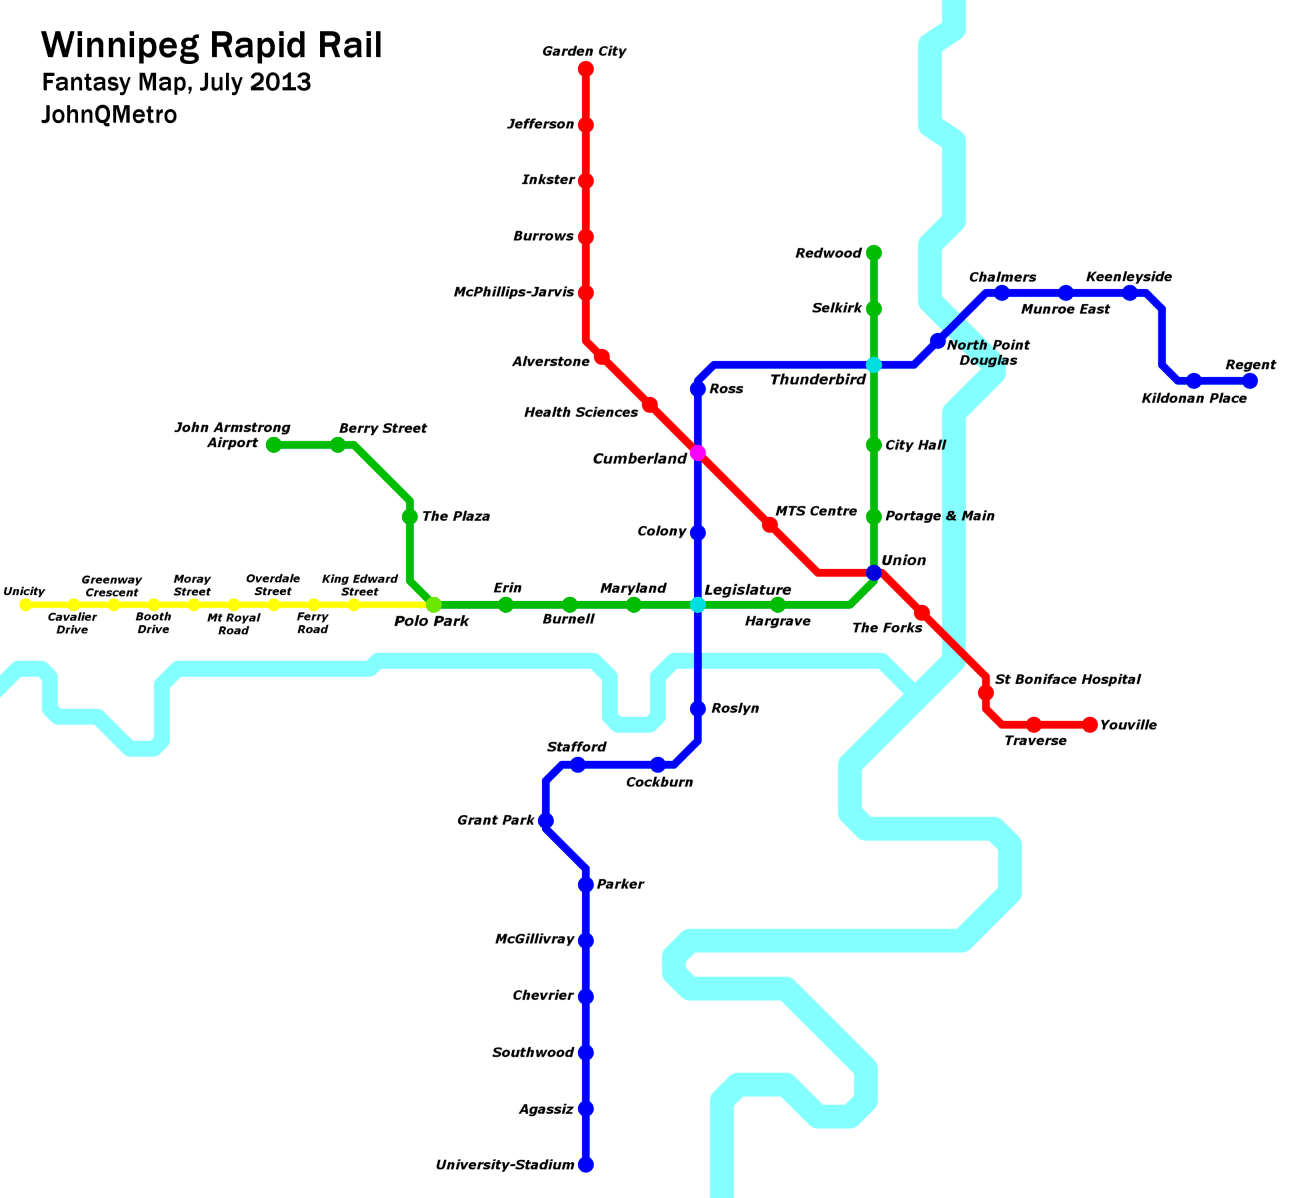 Fantasy Metro Maps